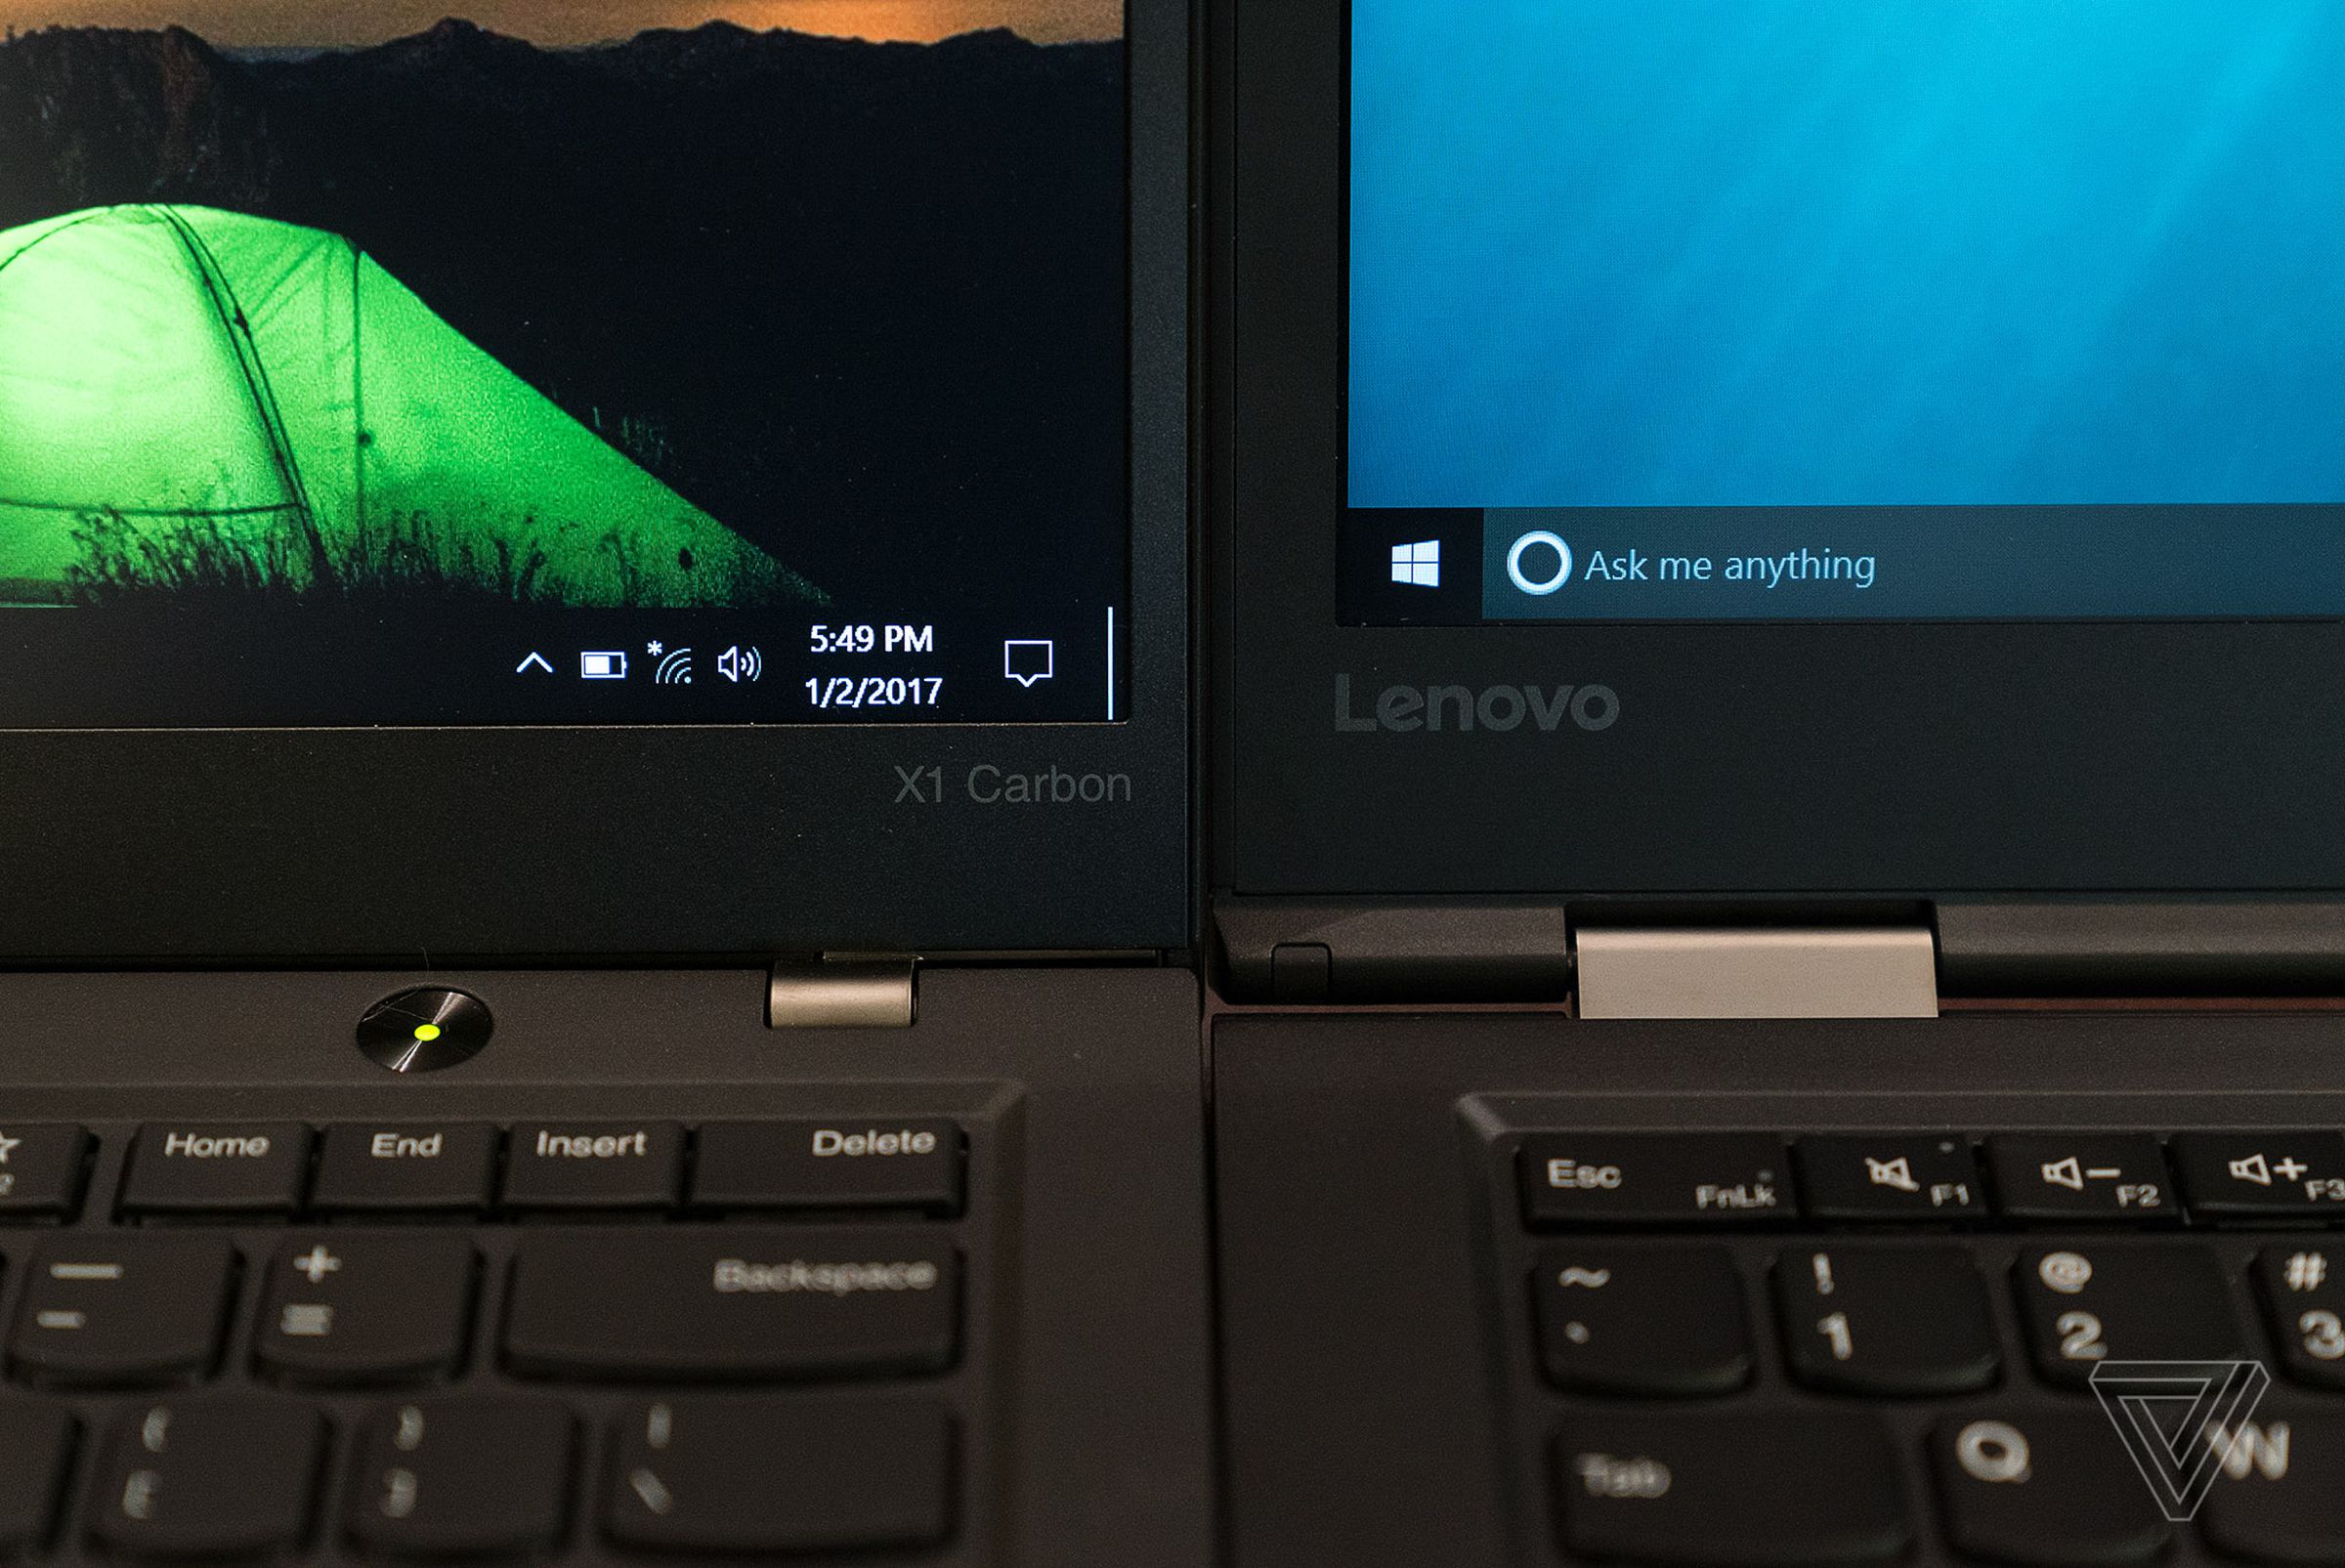 Lenovo ThinkPad X1 Carbon hands-on gallery